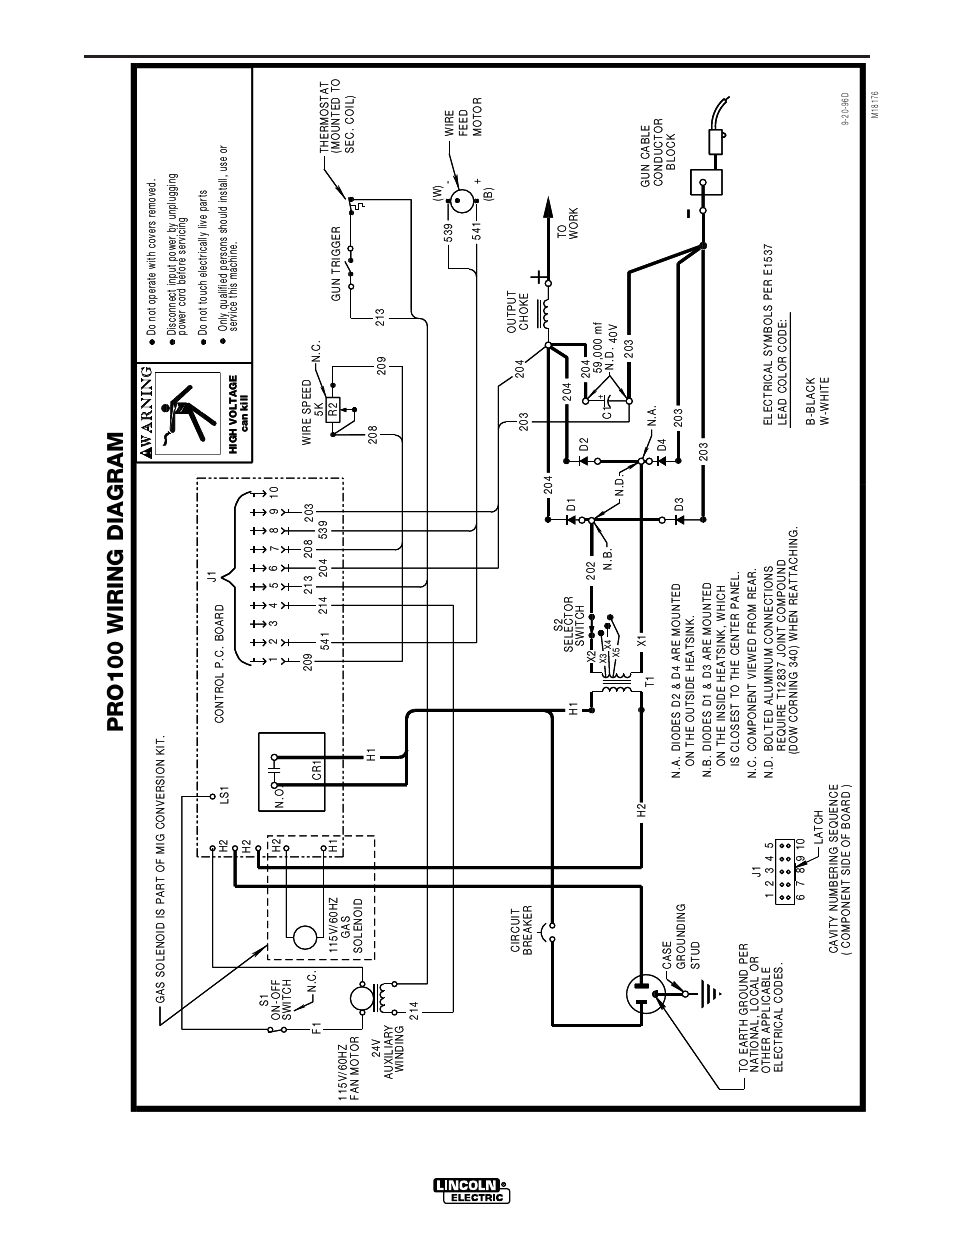 Diagrams Pro100 Wiring Diagram Pro 100 Lincoln Electric Im562 Pro 100 User Manual Page 42 47 Original Mode